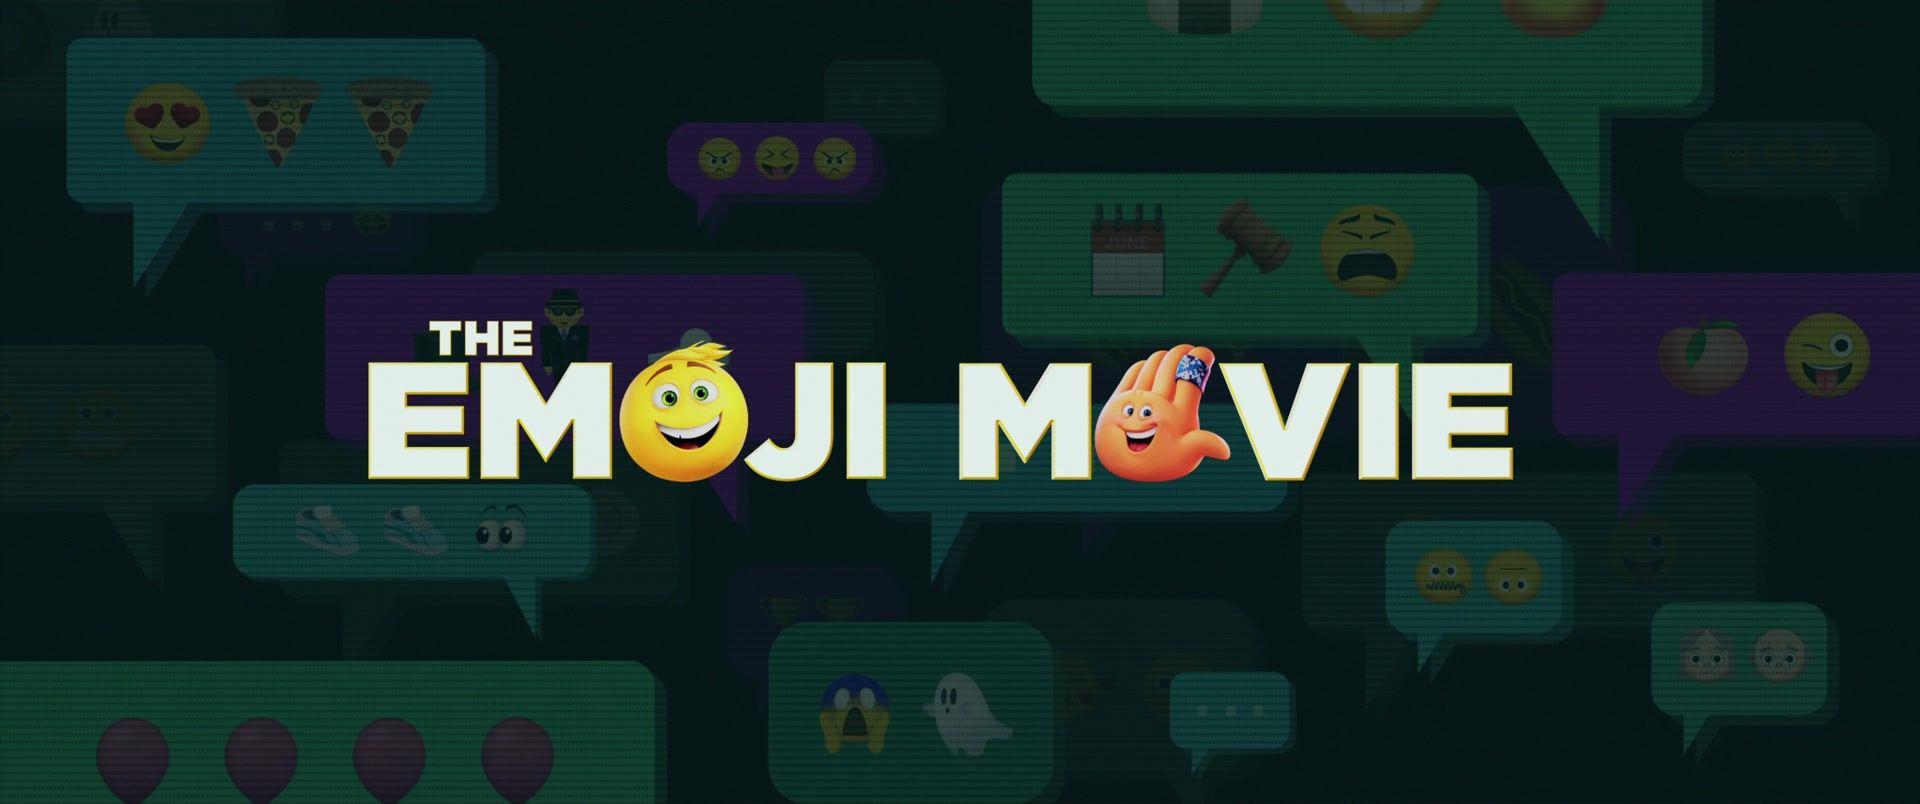 emoji movie production company